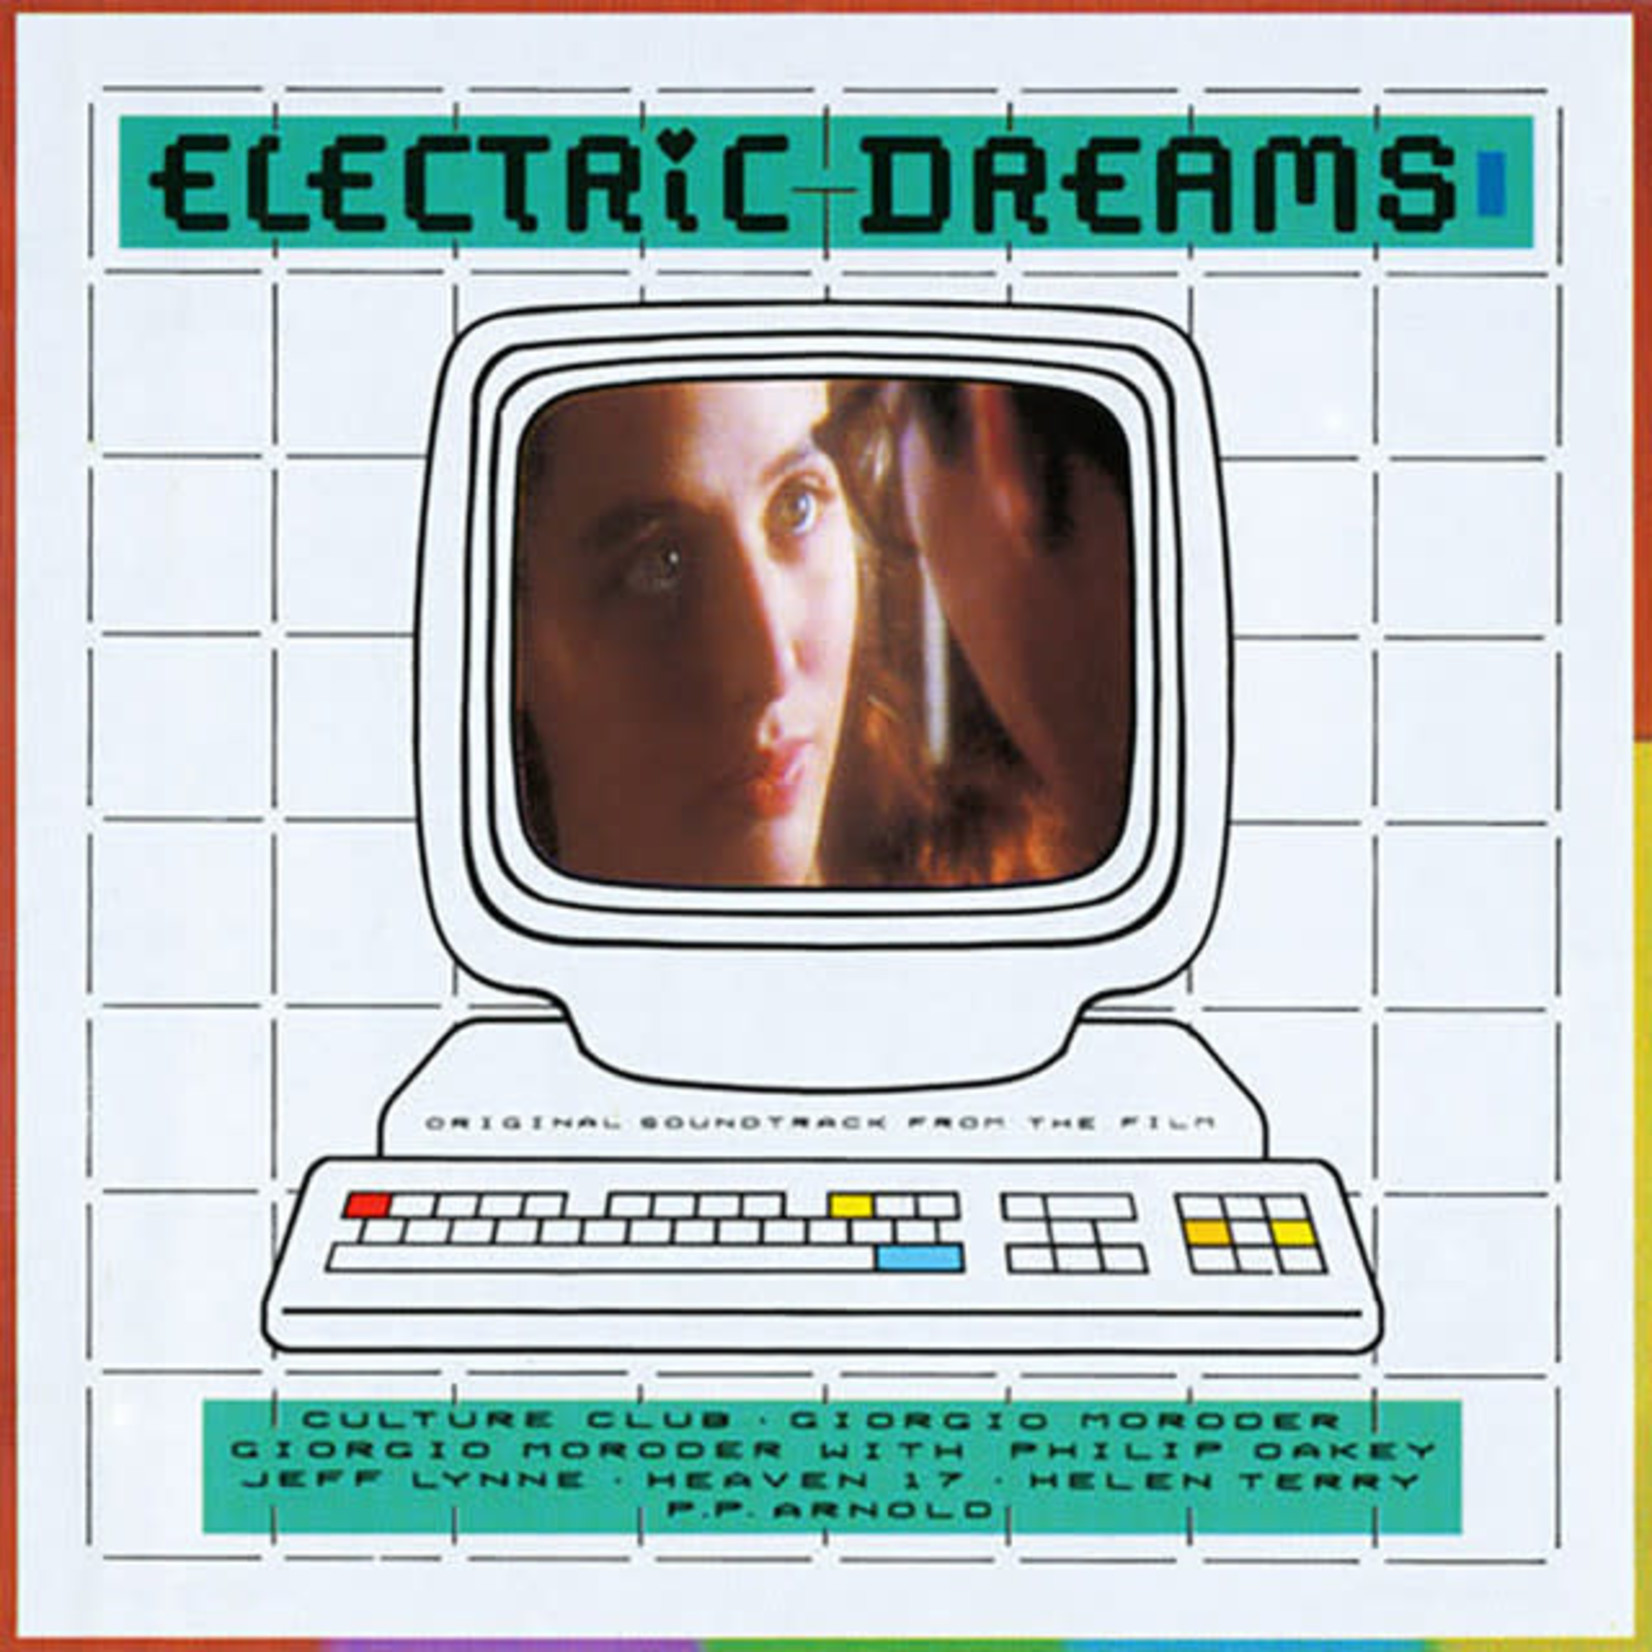 [Vintage] Various Artists - Electric Dreams (soundtrack)